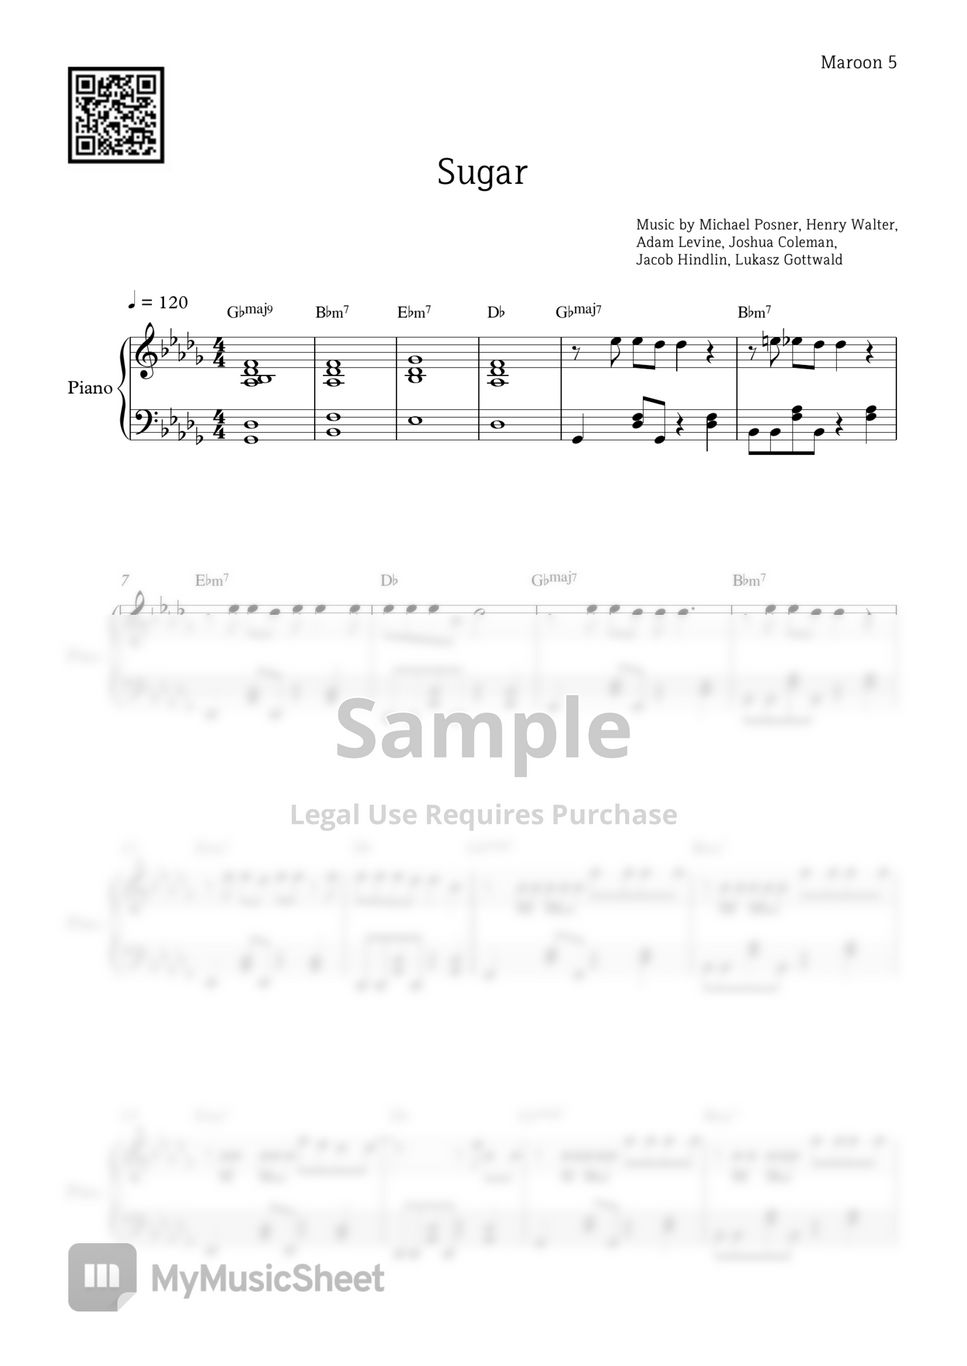 Maroon 5 - Sugar Sheets by PIANOiNU